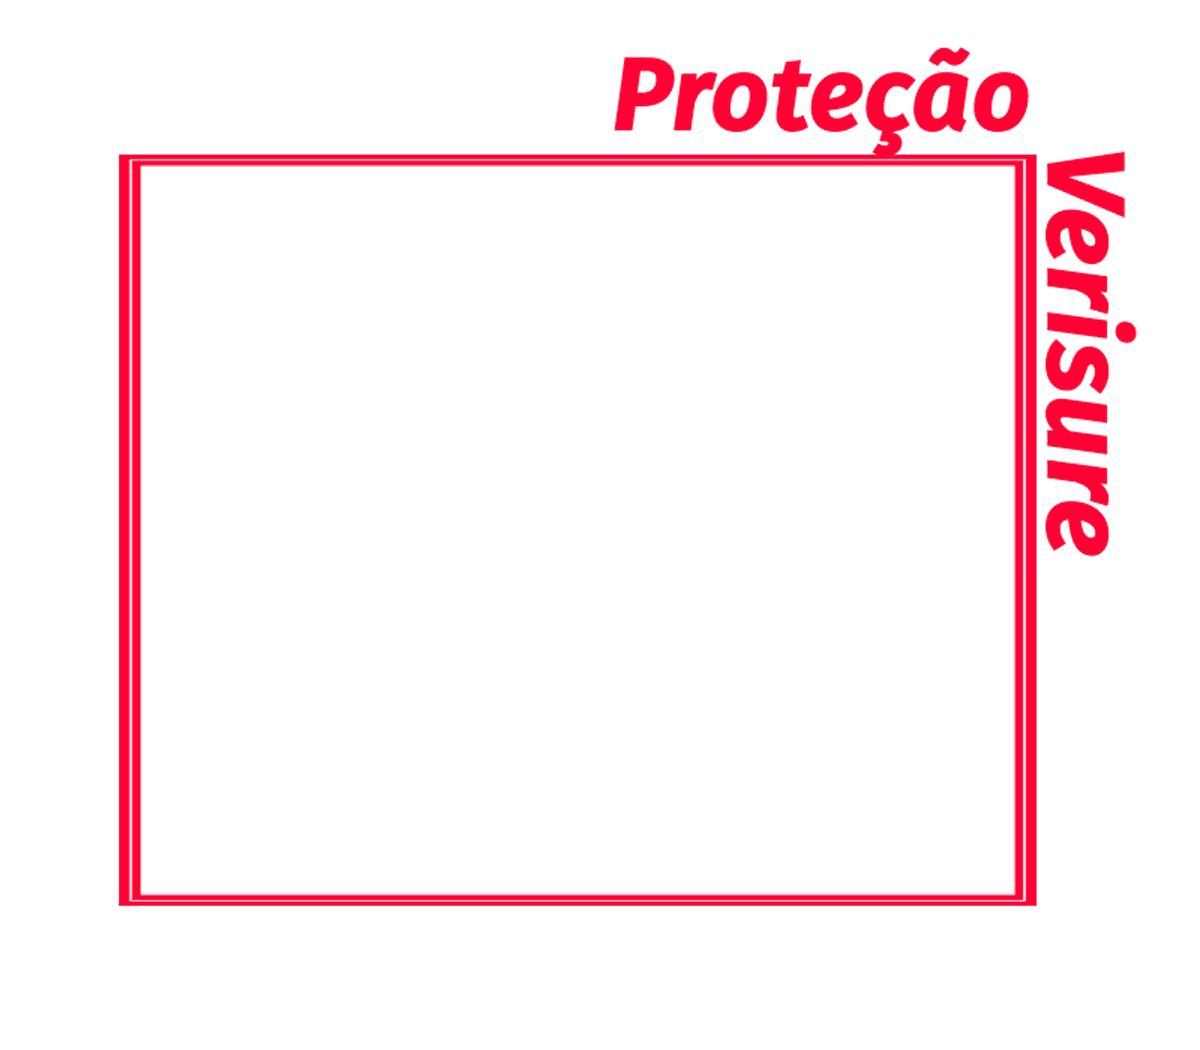 Protecao Alarme Monitorado Sticker By Verisure Brasil For